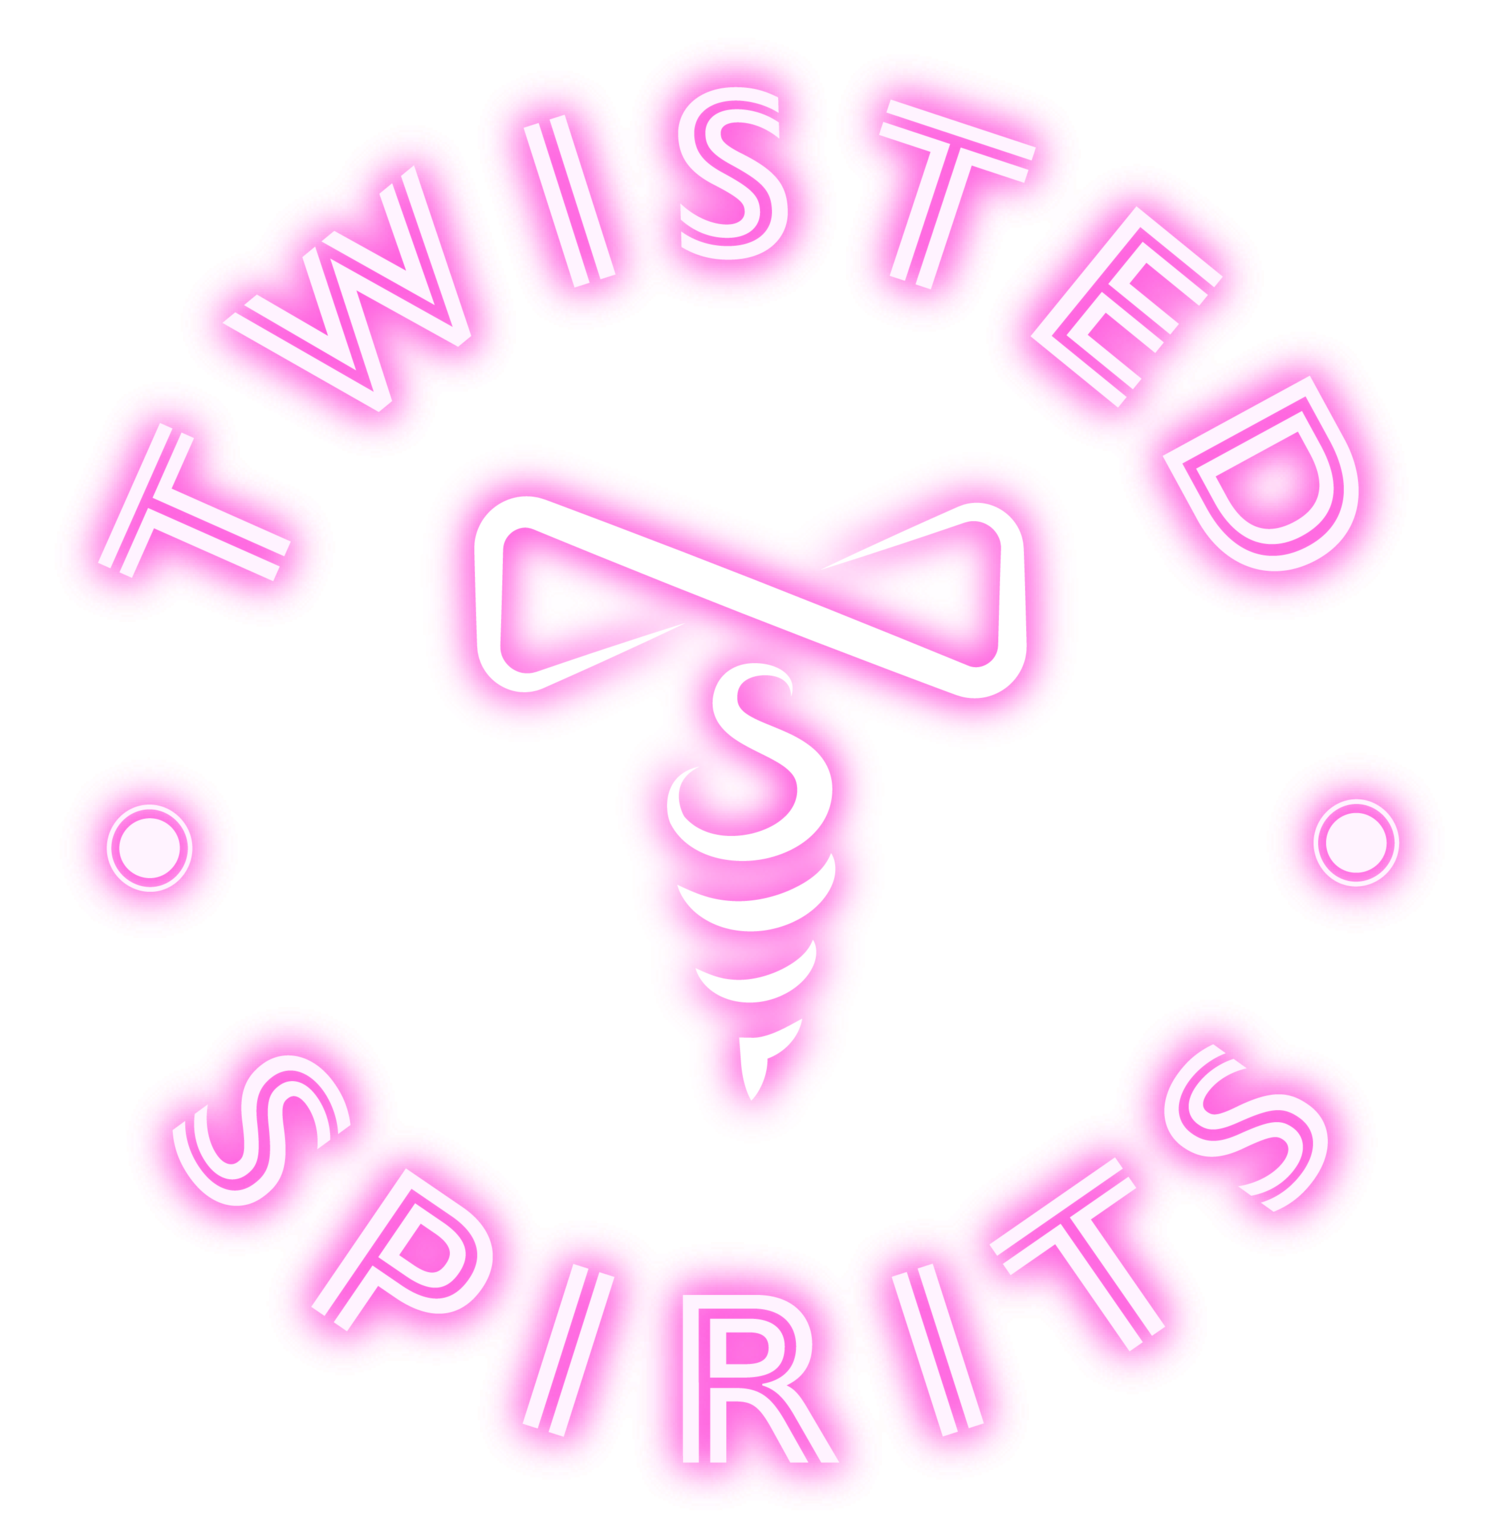 Twisted Spirits